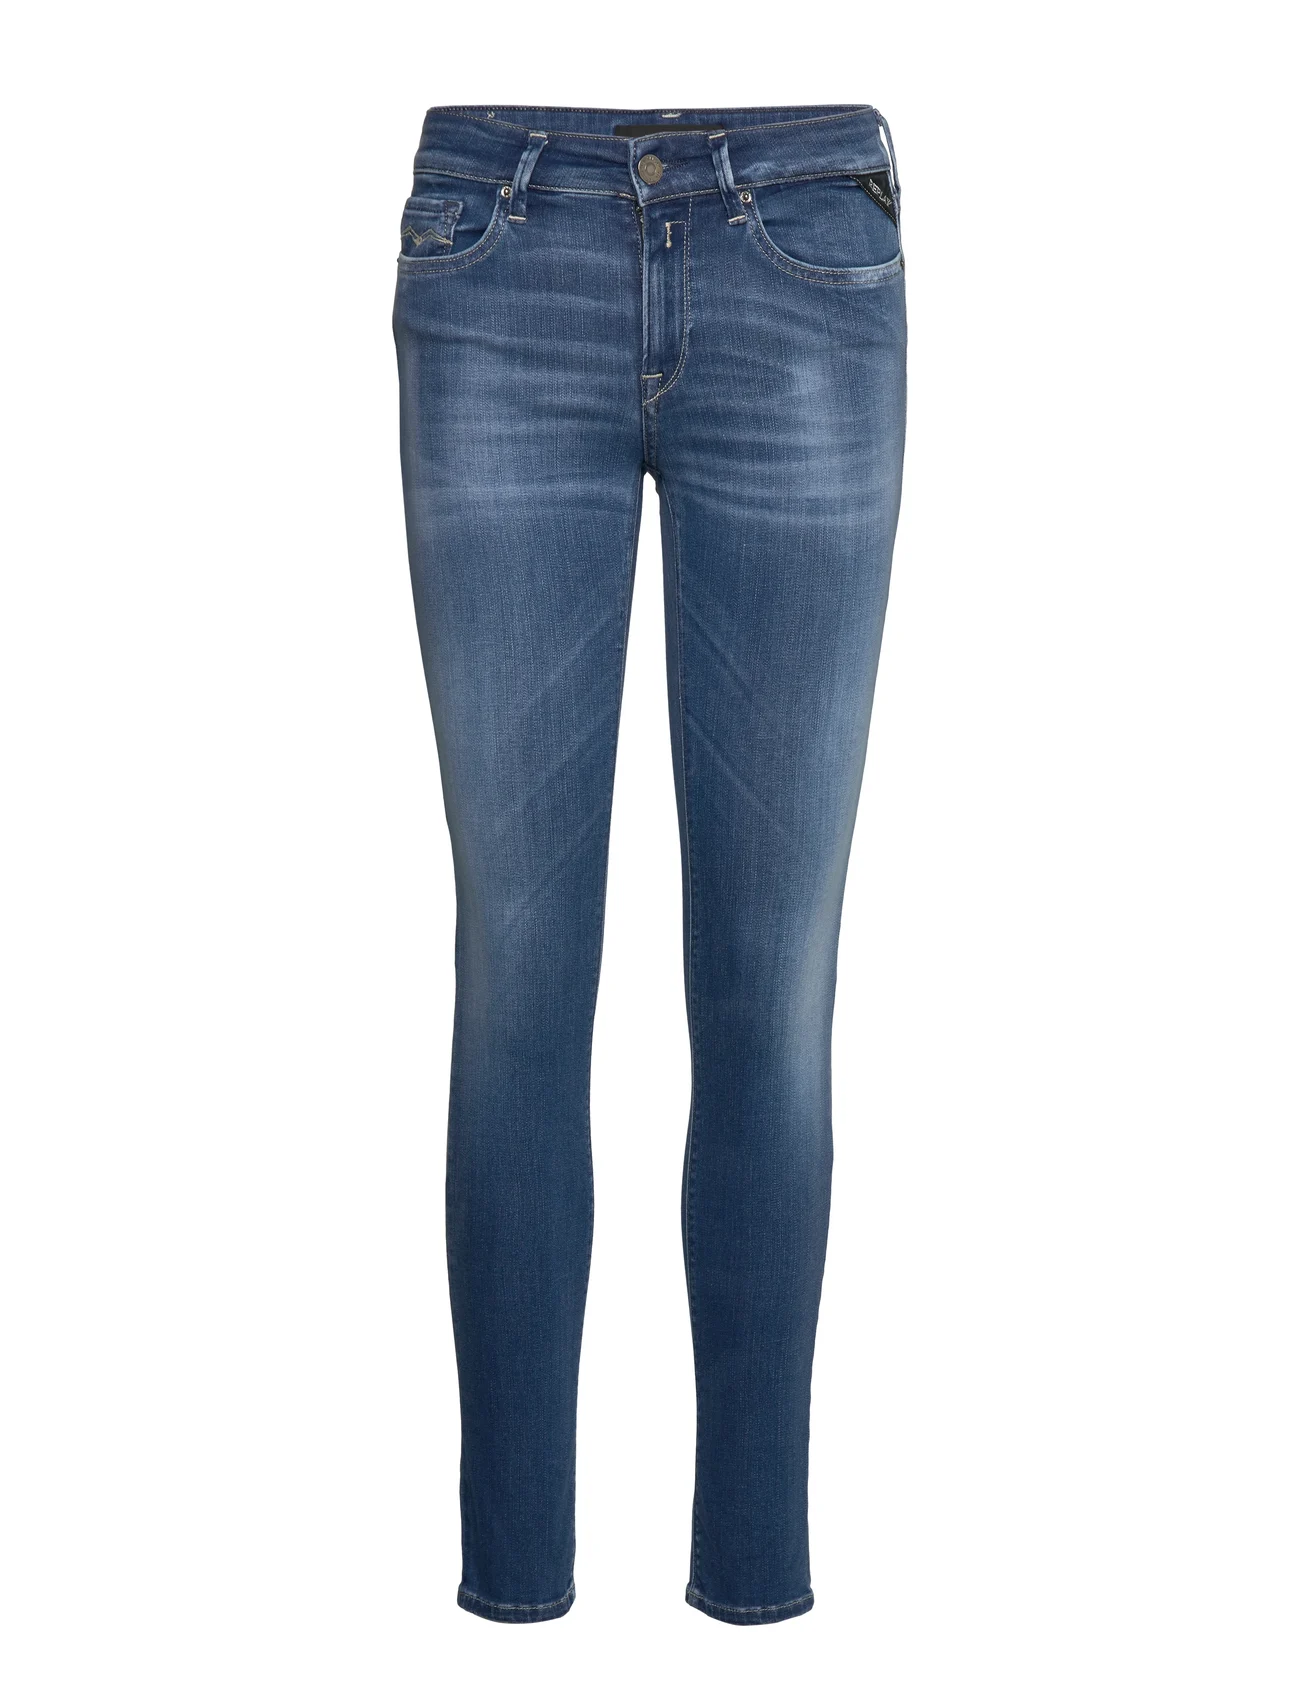 Replay - NEW LUZ - skinny jeans - medium blue - 0